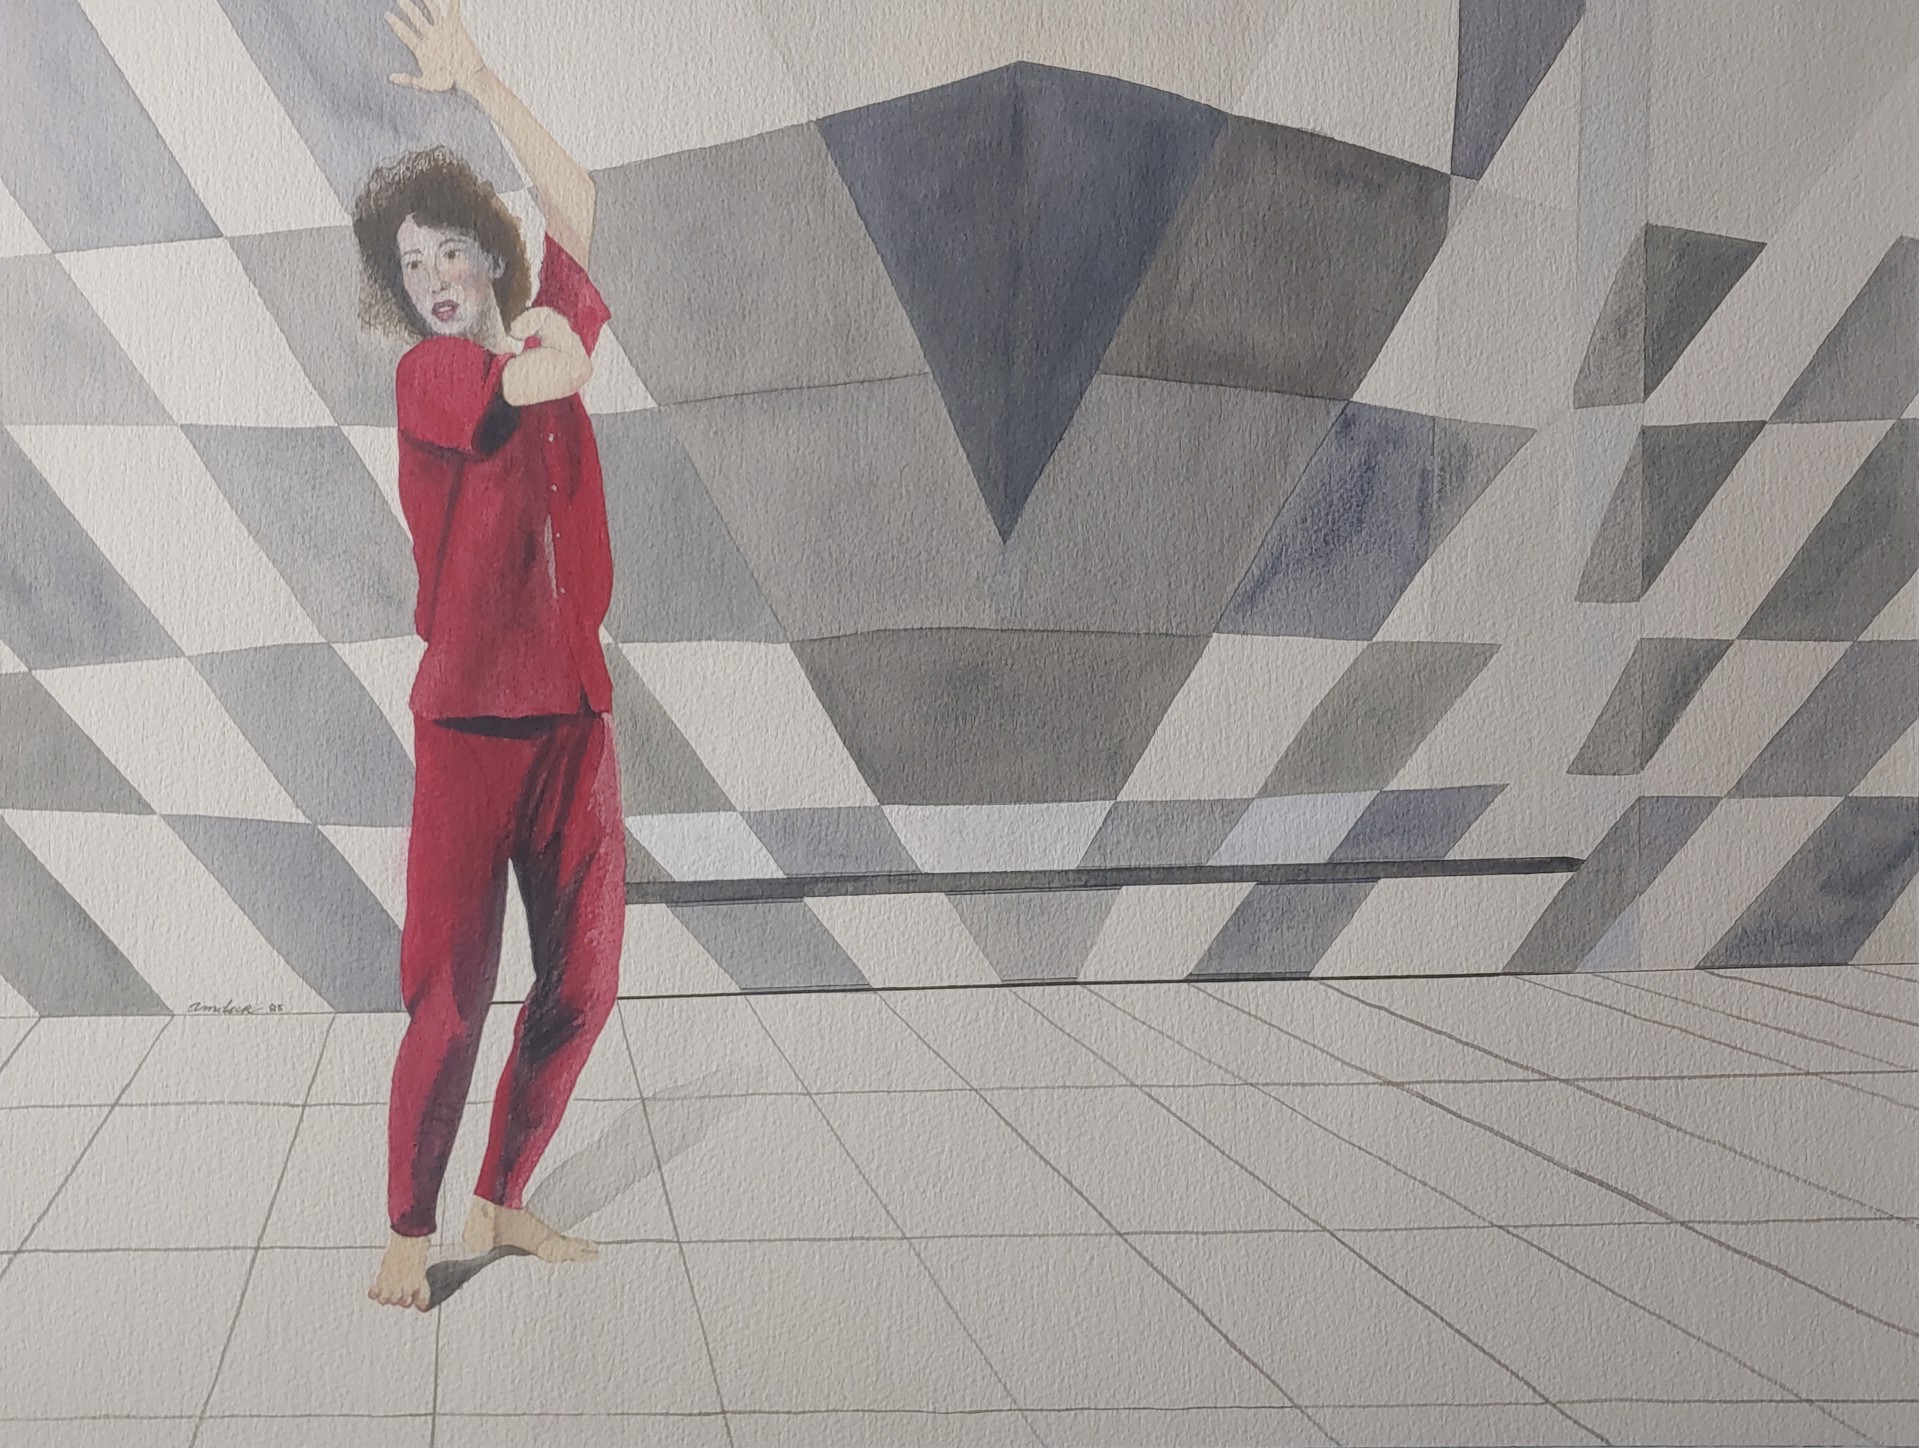 Dancer in Watercolor by David Amdur